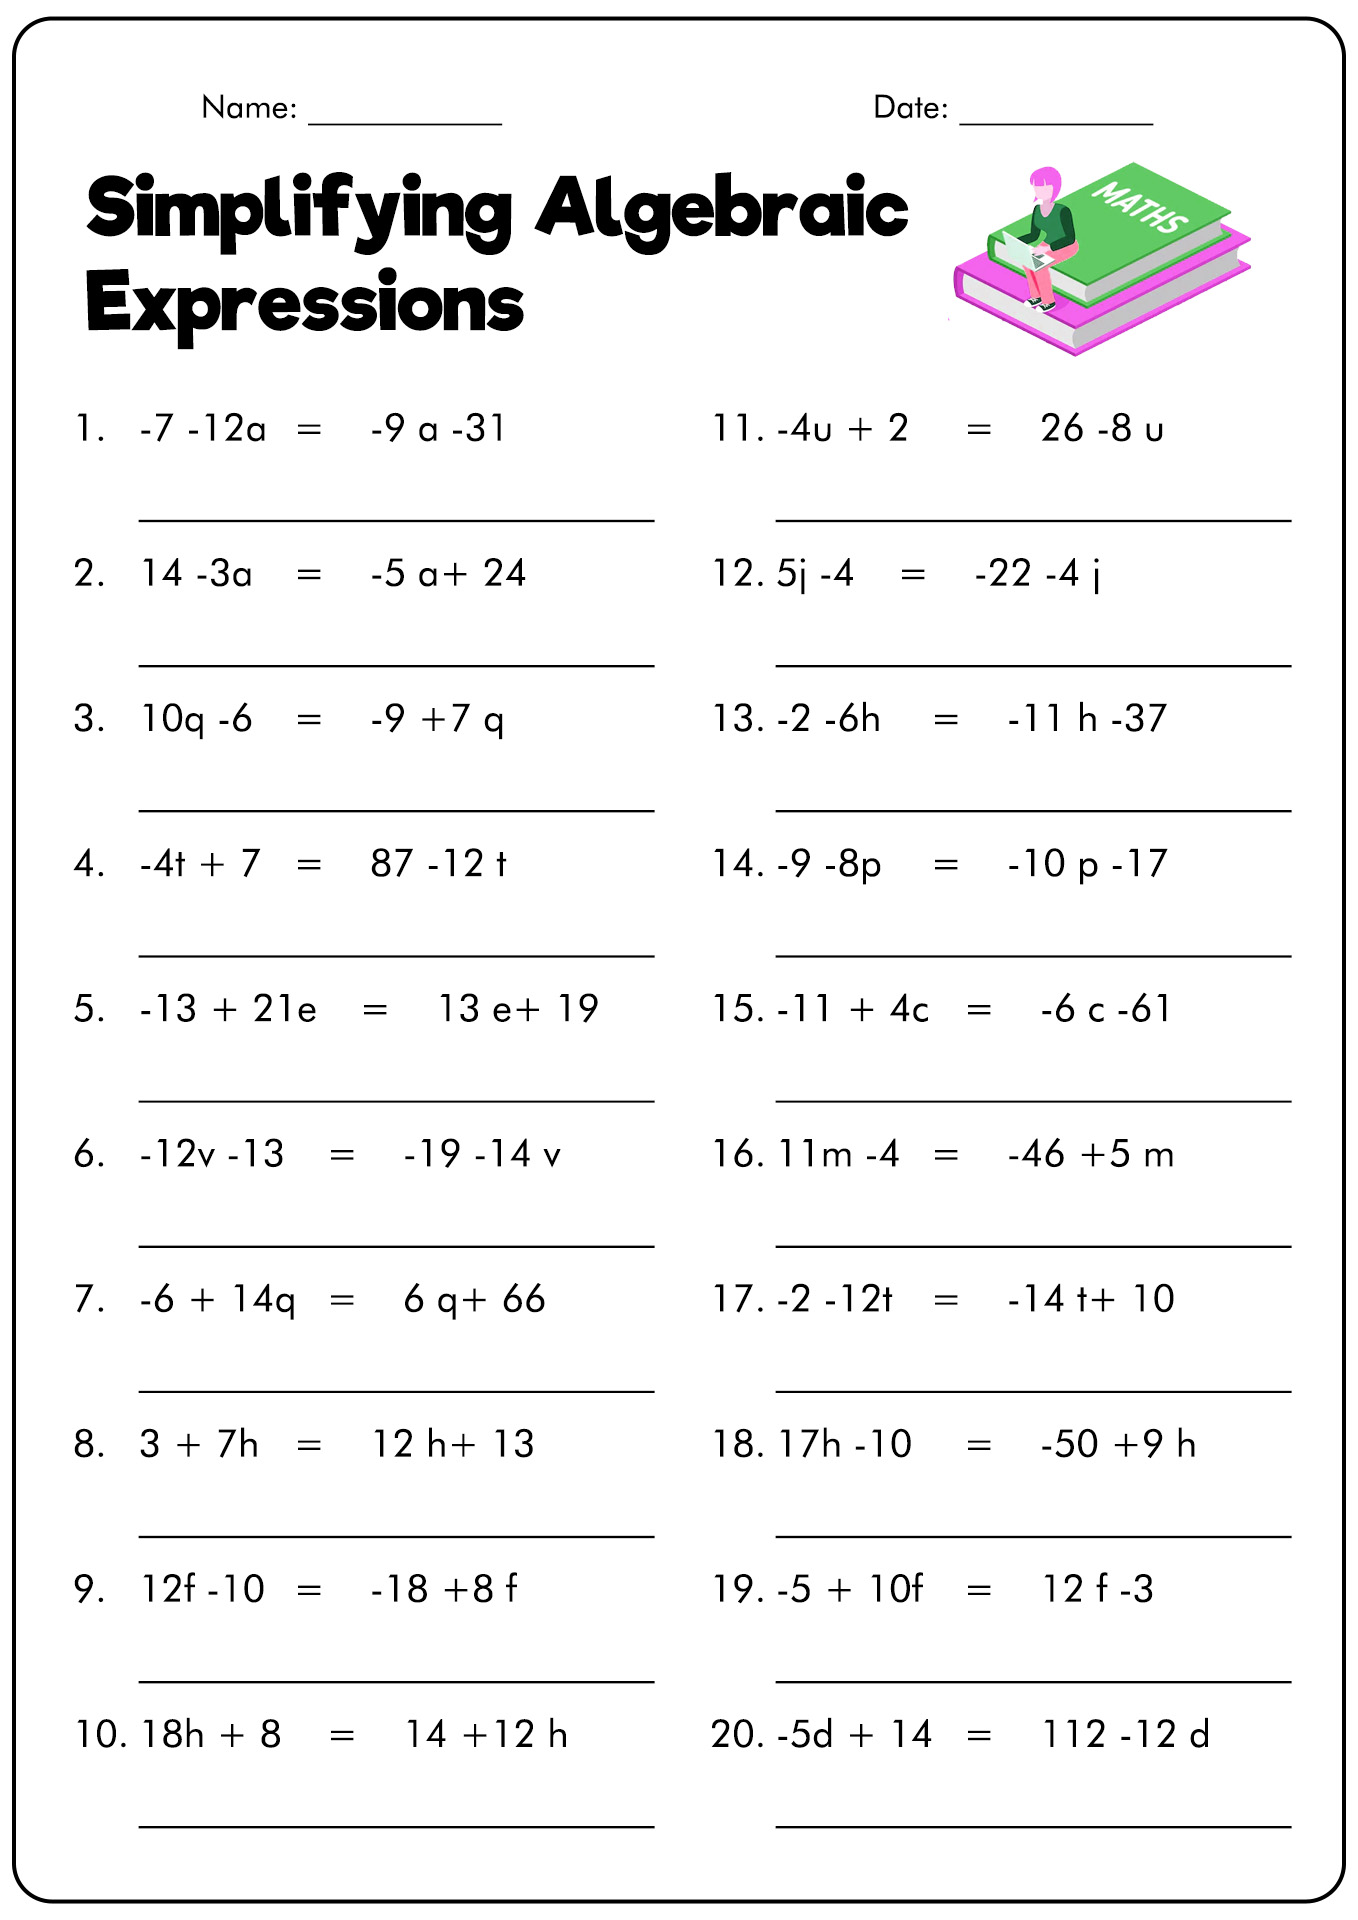 algebraic-expressions-worksheet-9th-grade